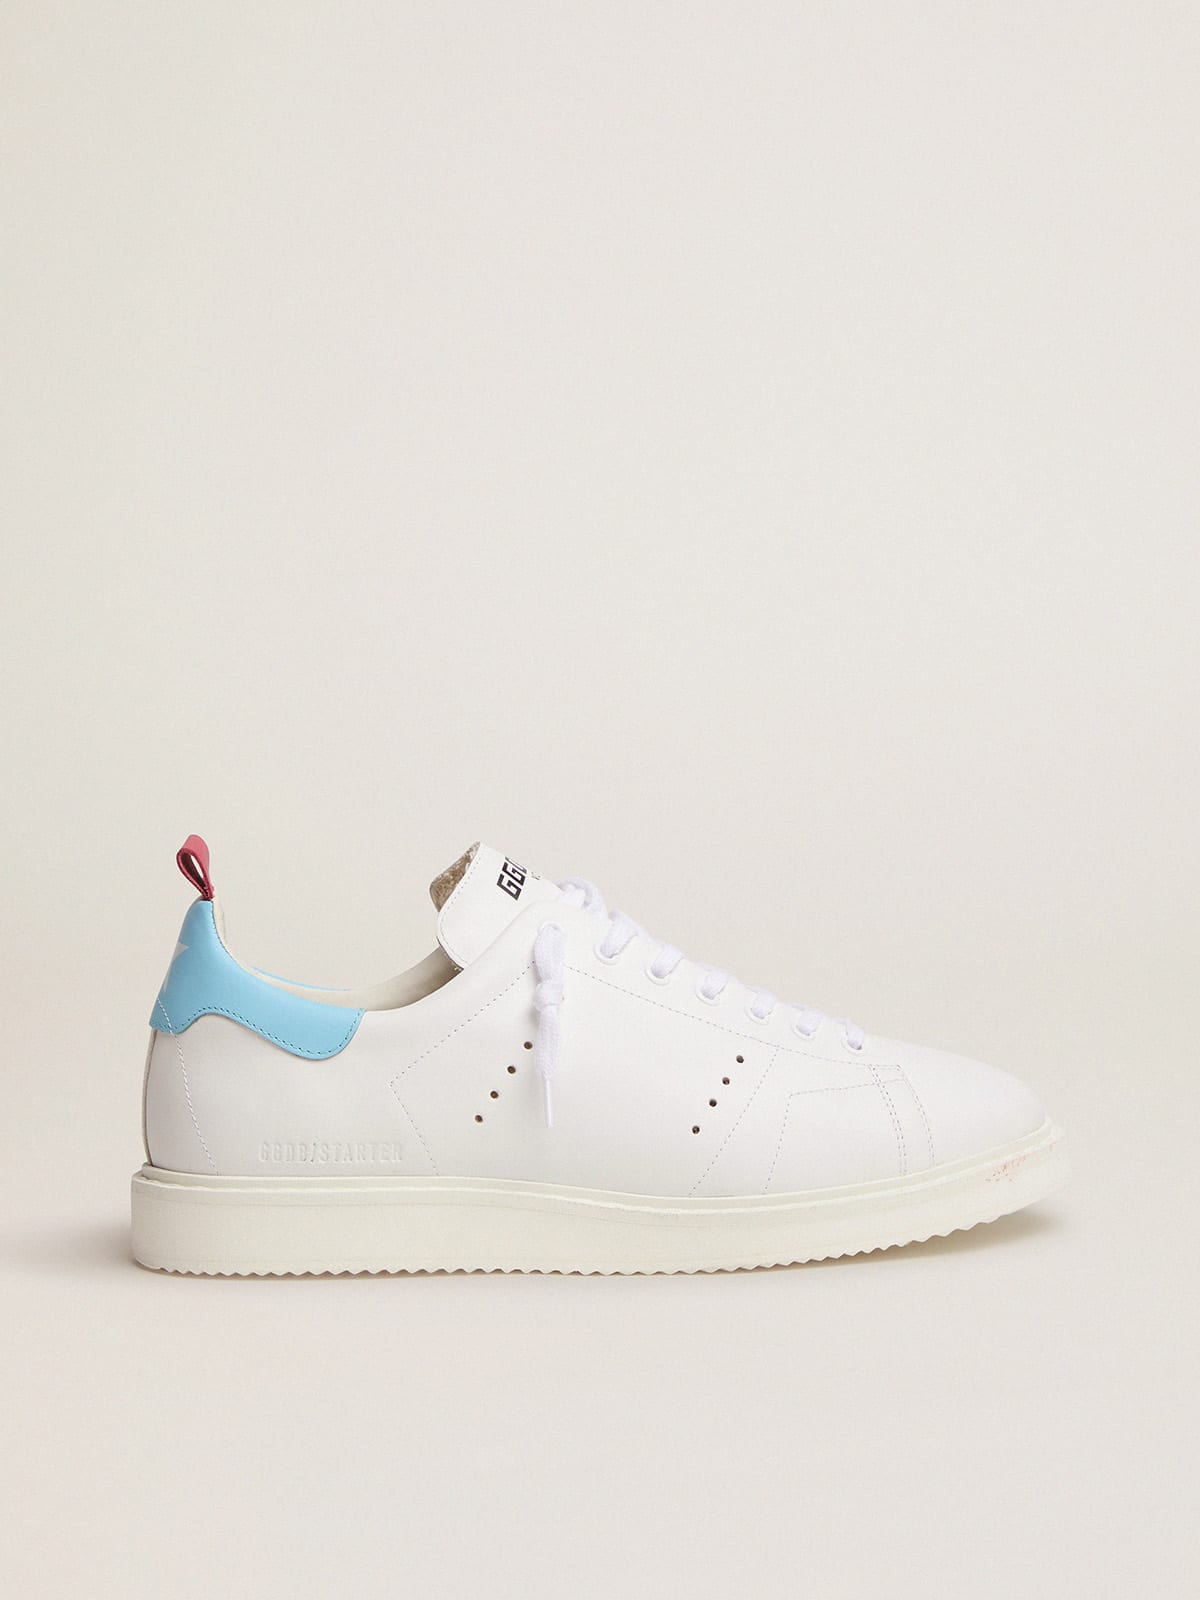 Golden Goose - Sneakers Starter LTD blanches avec contrefort bleu clair in 